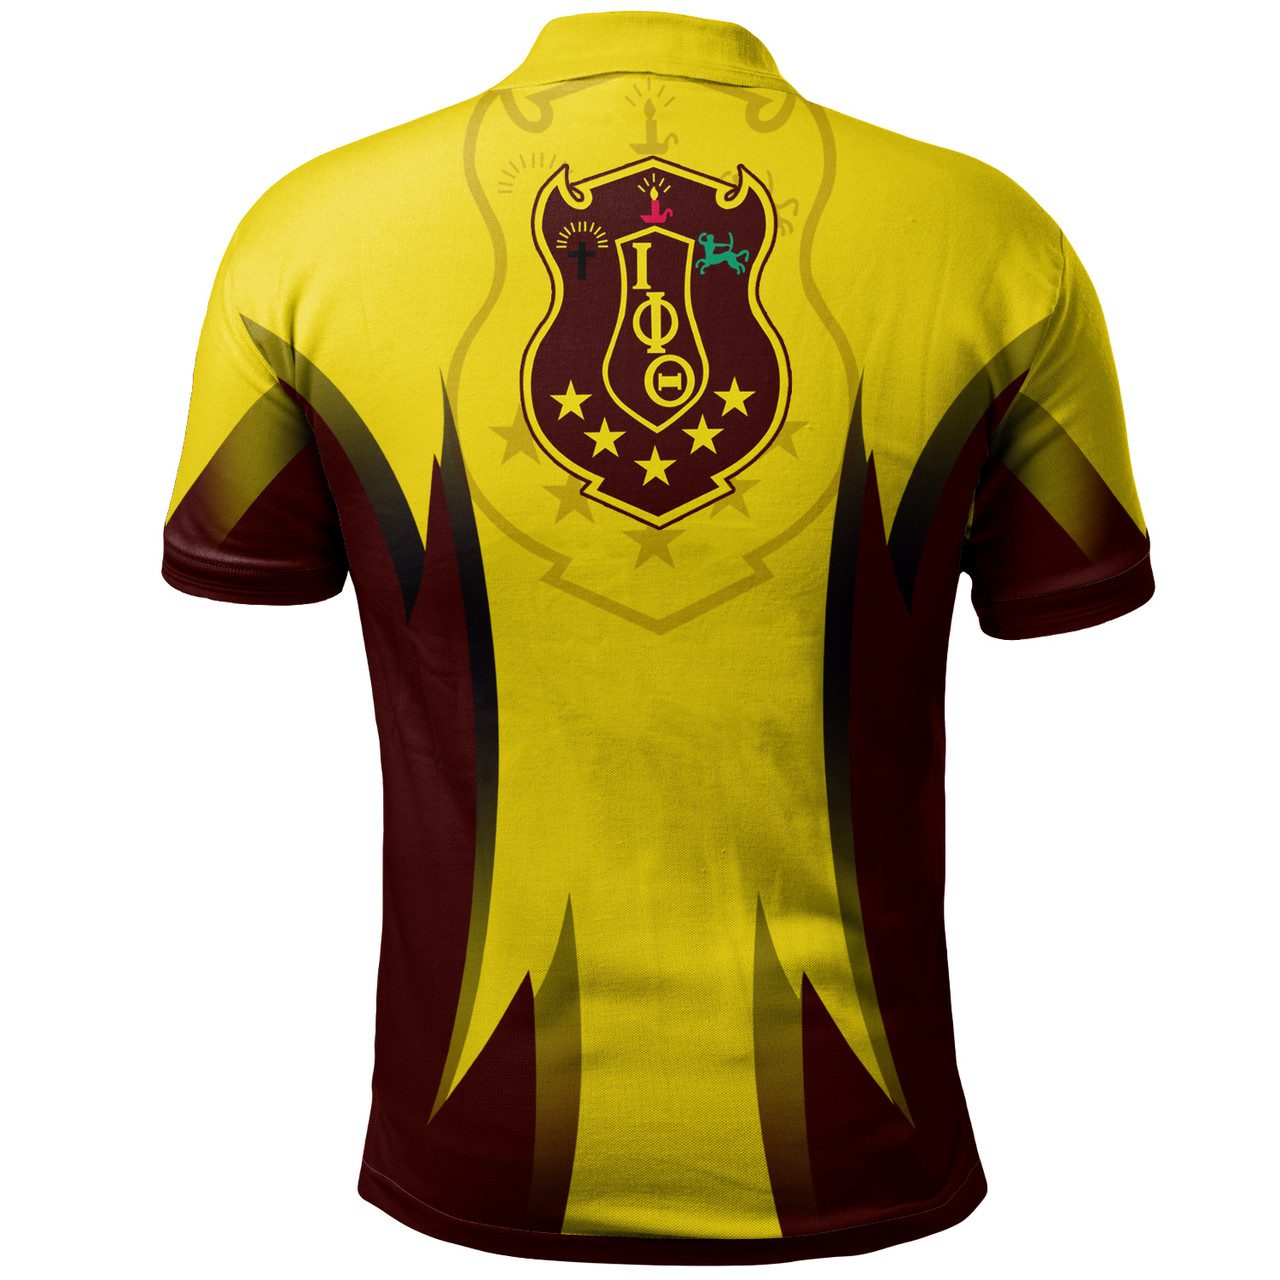 Iota Phi Theta Polo Shirt – Fraternity Limited Version Polo Shirt